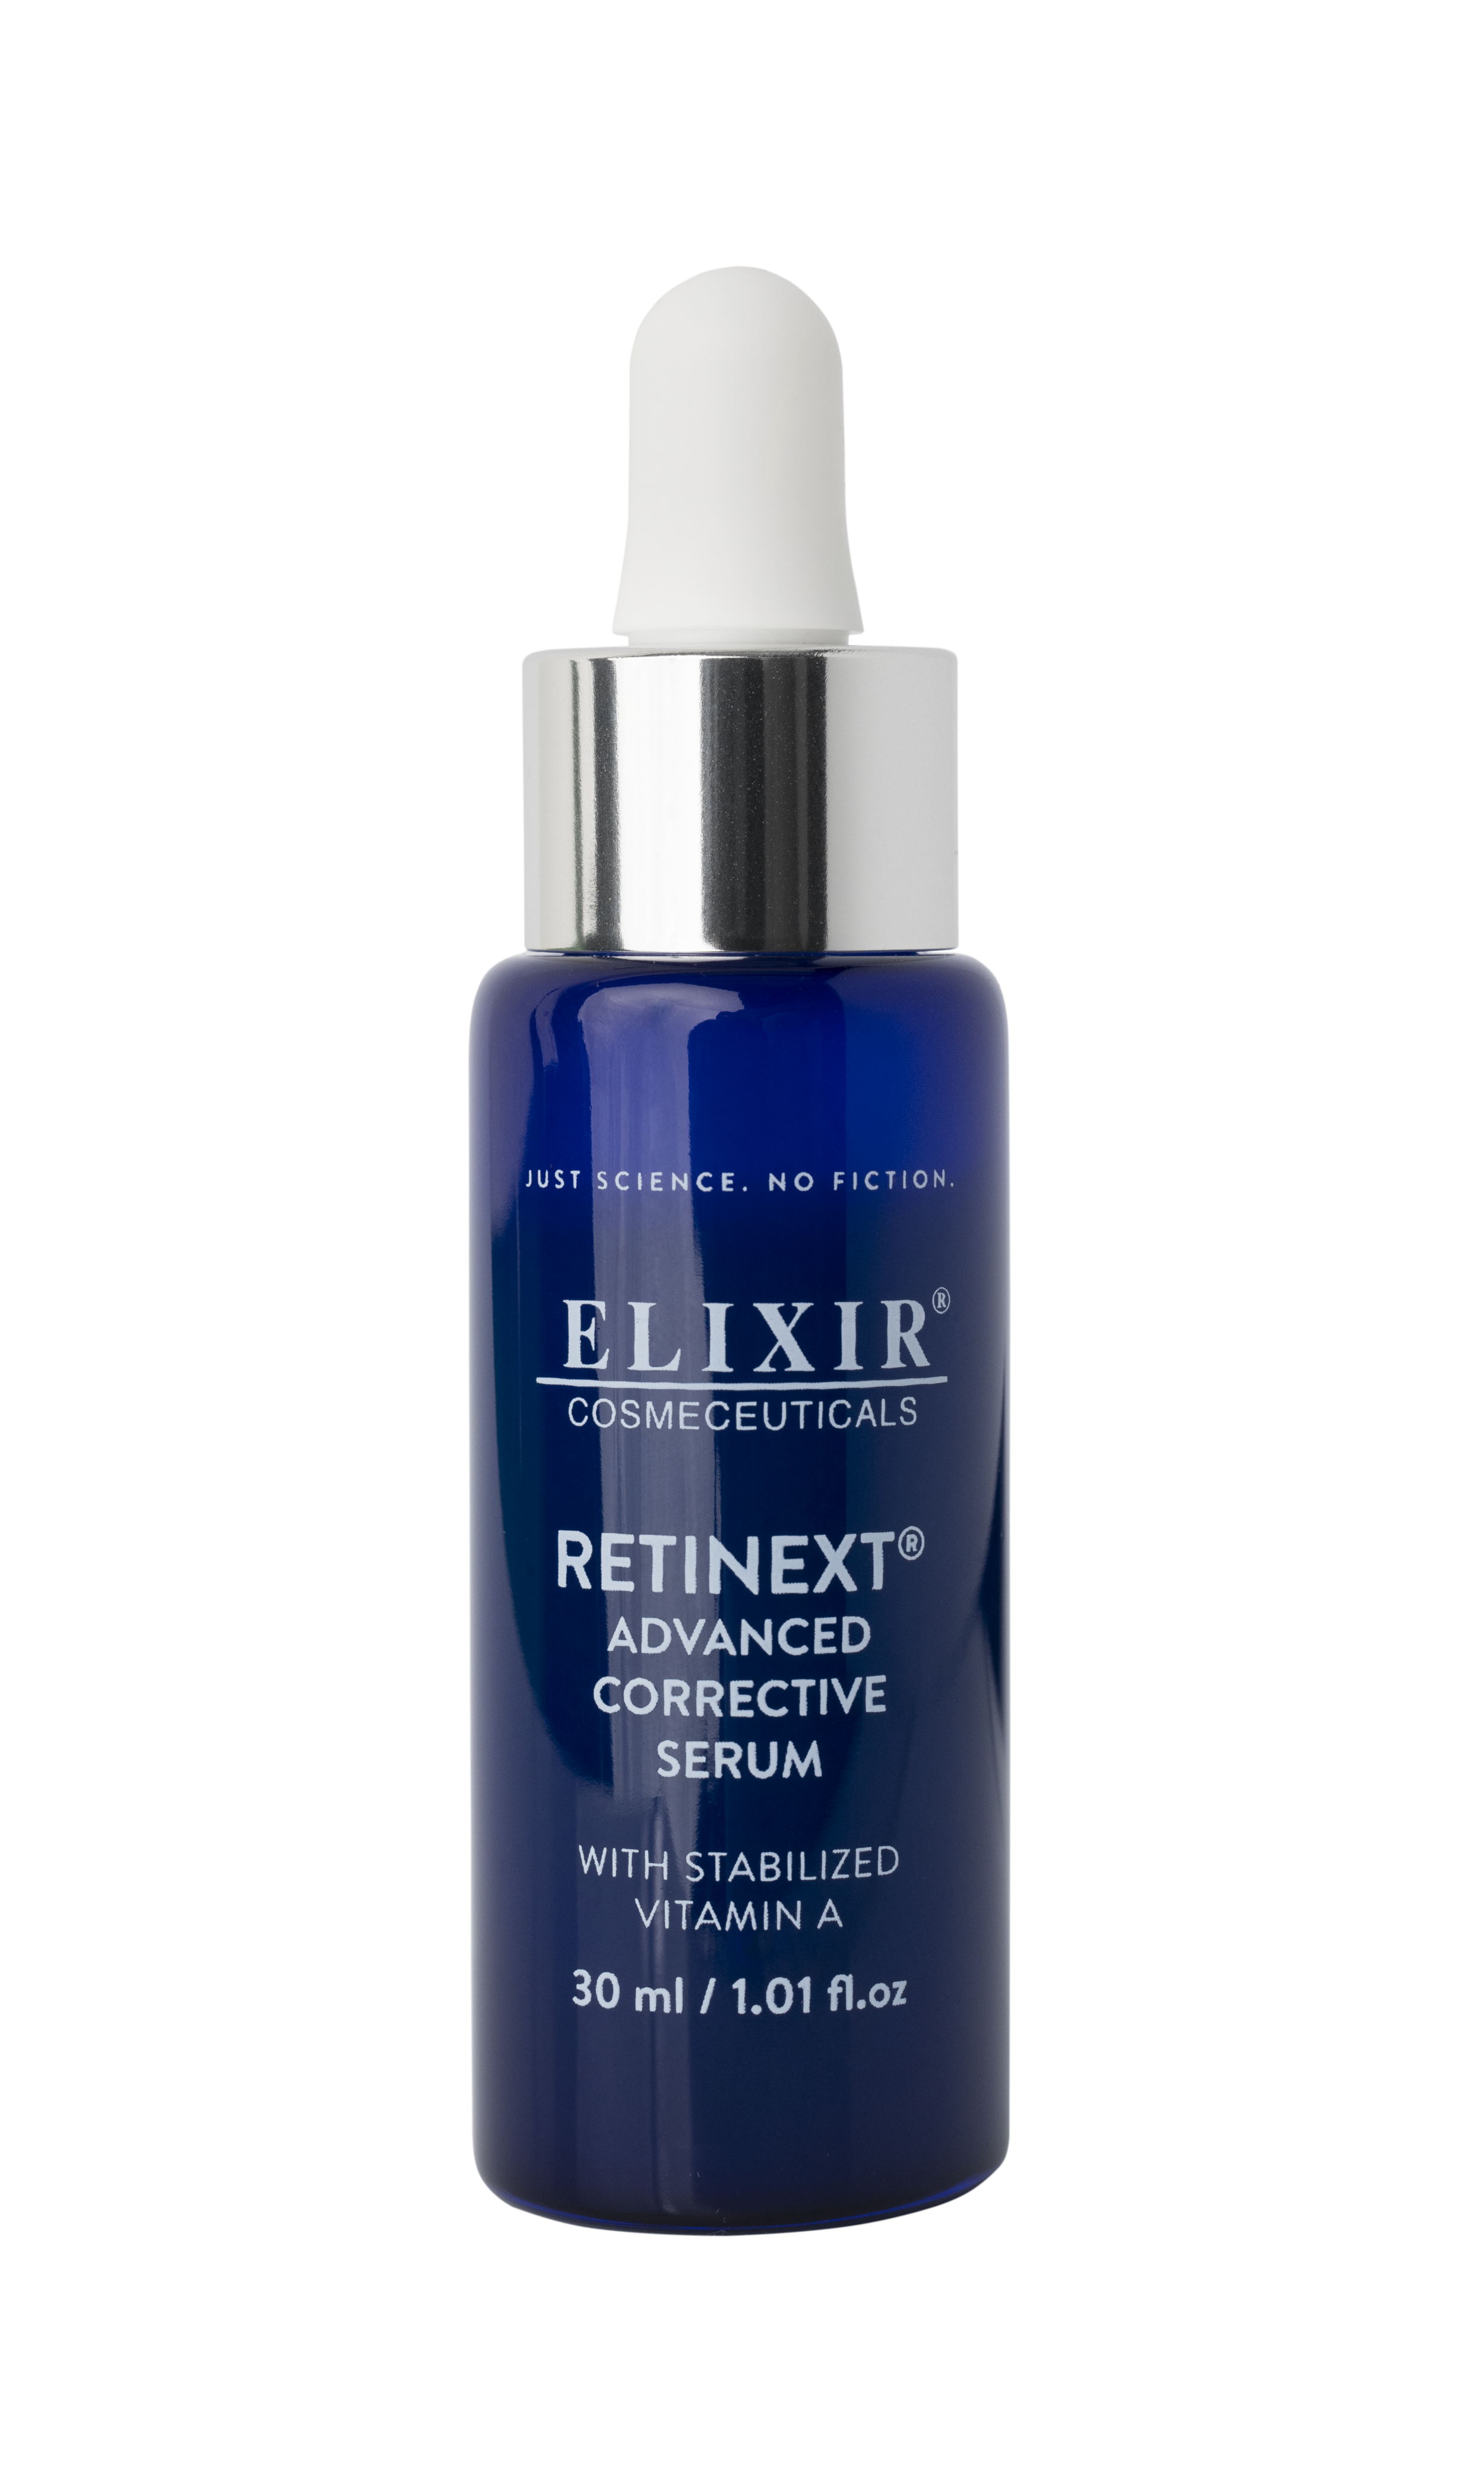 Elixir Retinext Advanced Corrective Serum